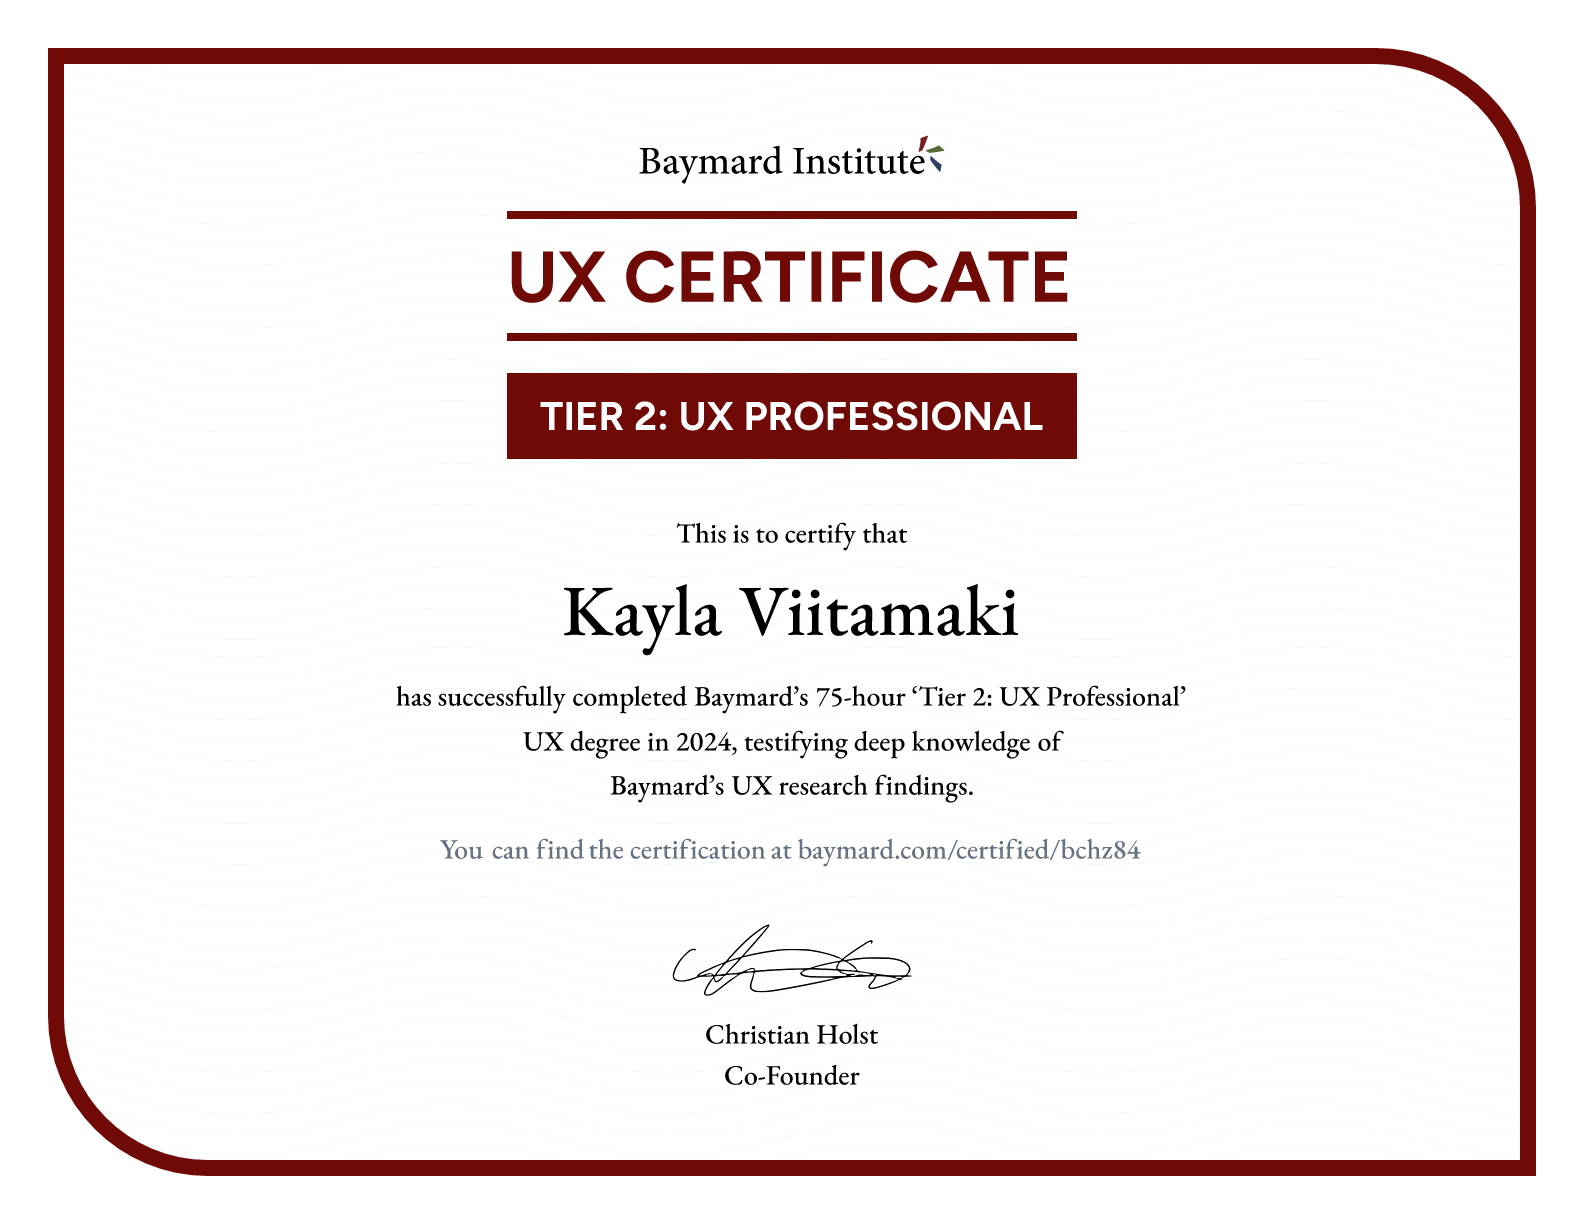 Kayla Viitamaki’s certificate